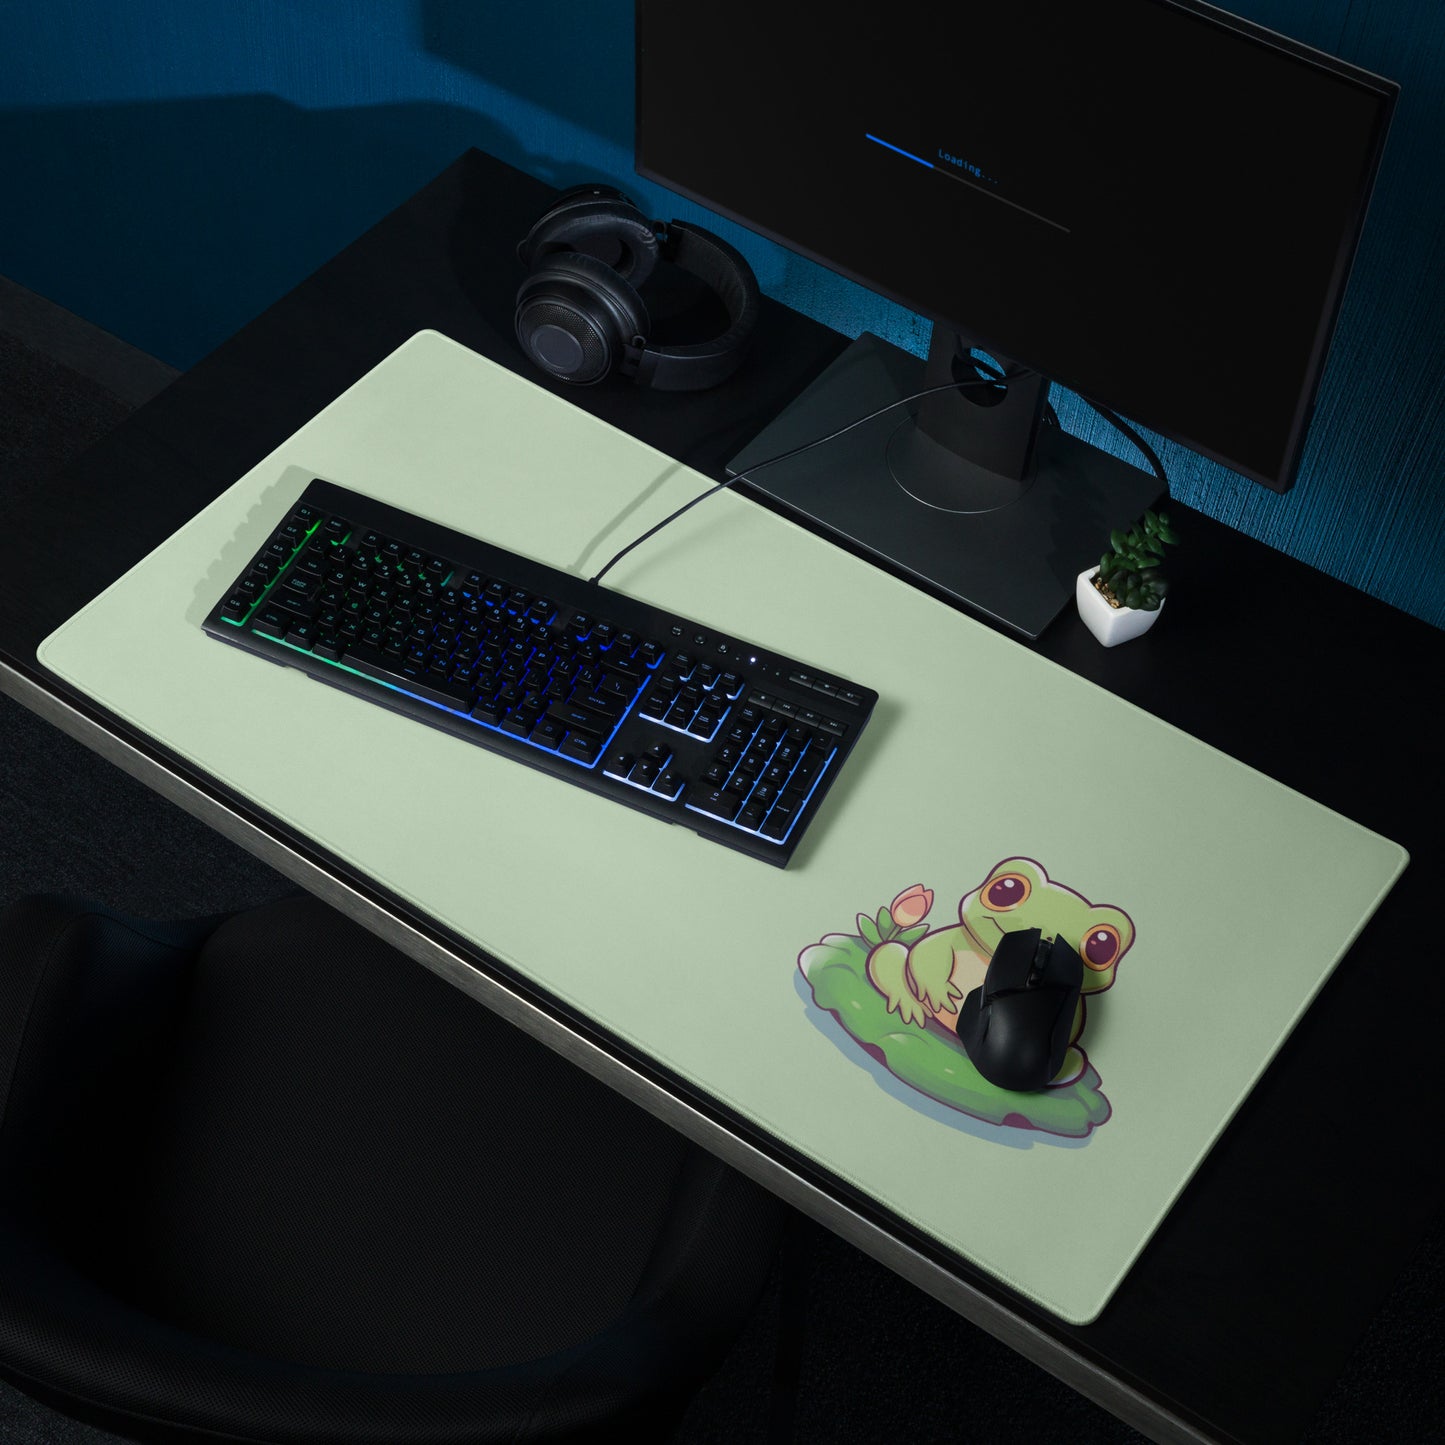 A 36" x 18" desk pad with a cute frog on it shown on a desk setup. Green in color.